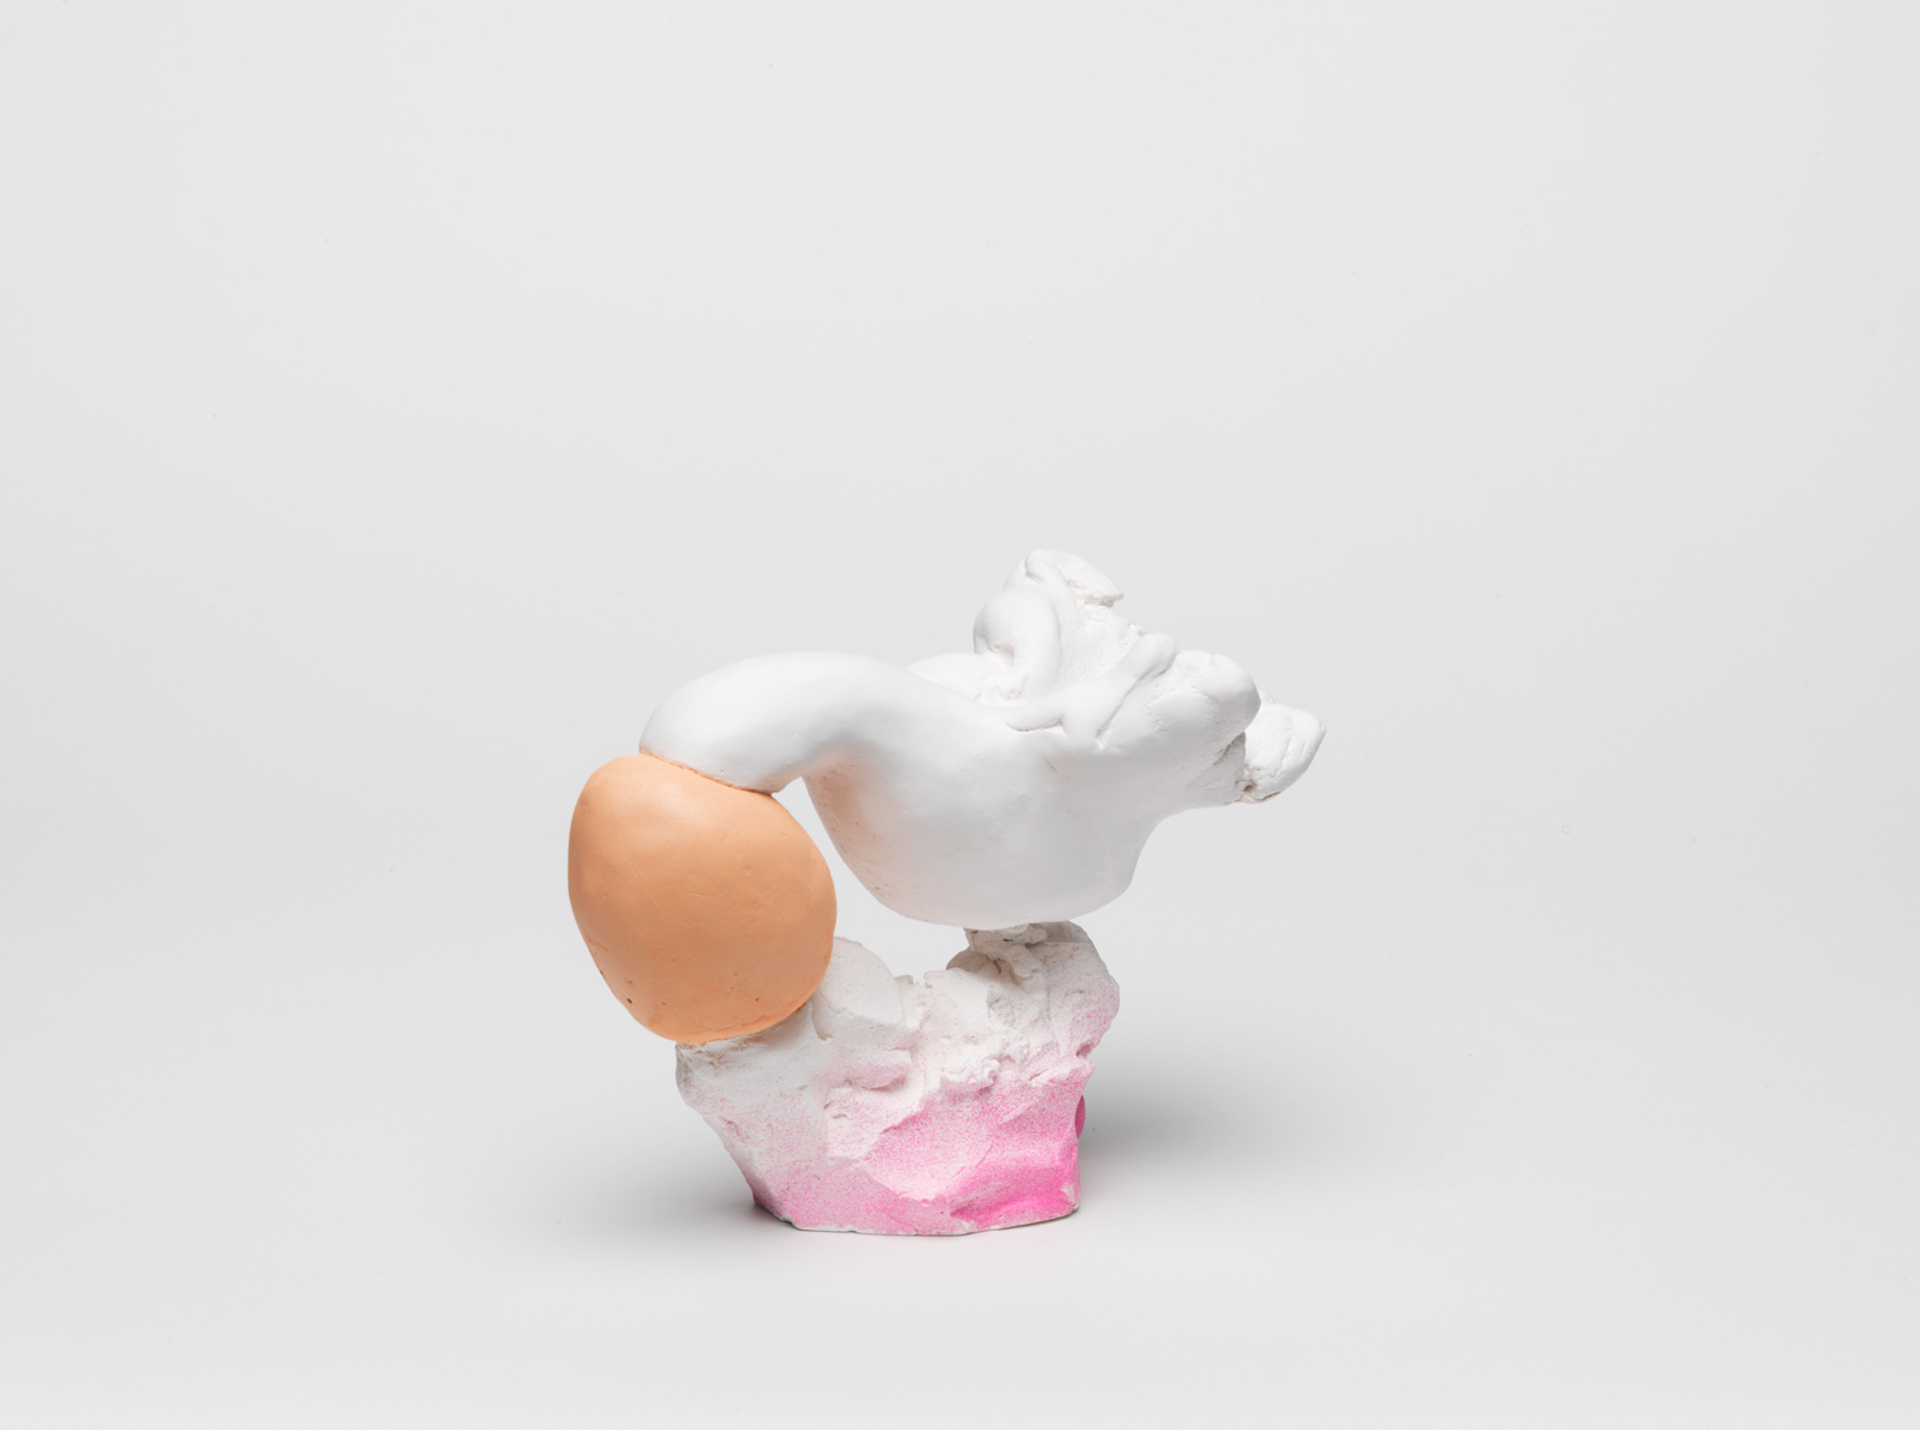 Untitled (Bird Head in Egg)